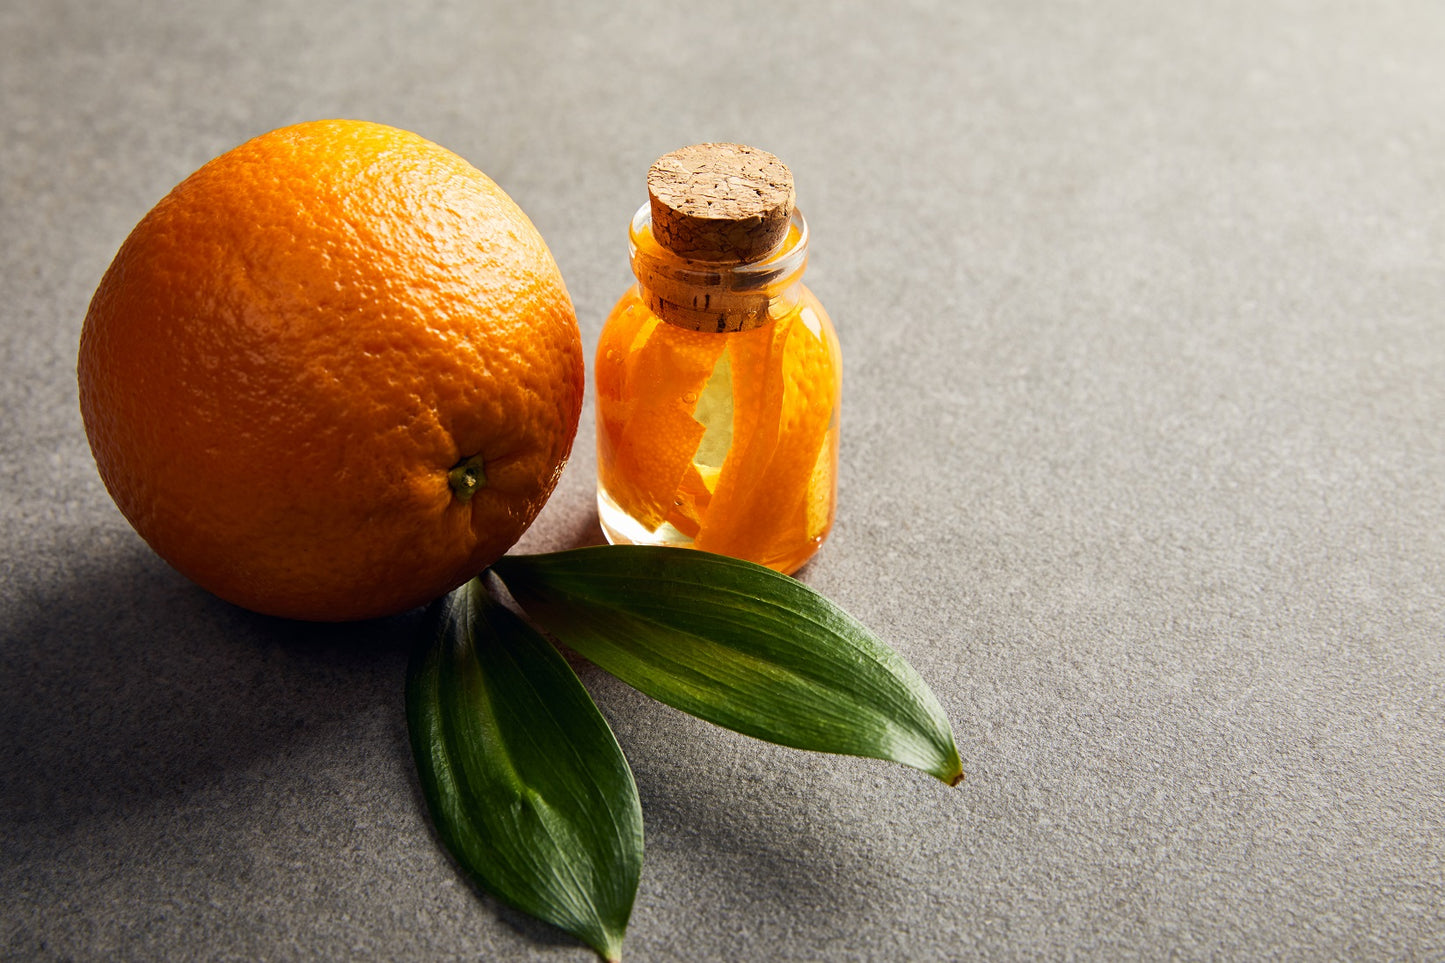 Orange Essential Oil:  100% Pure & Therapeutic